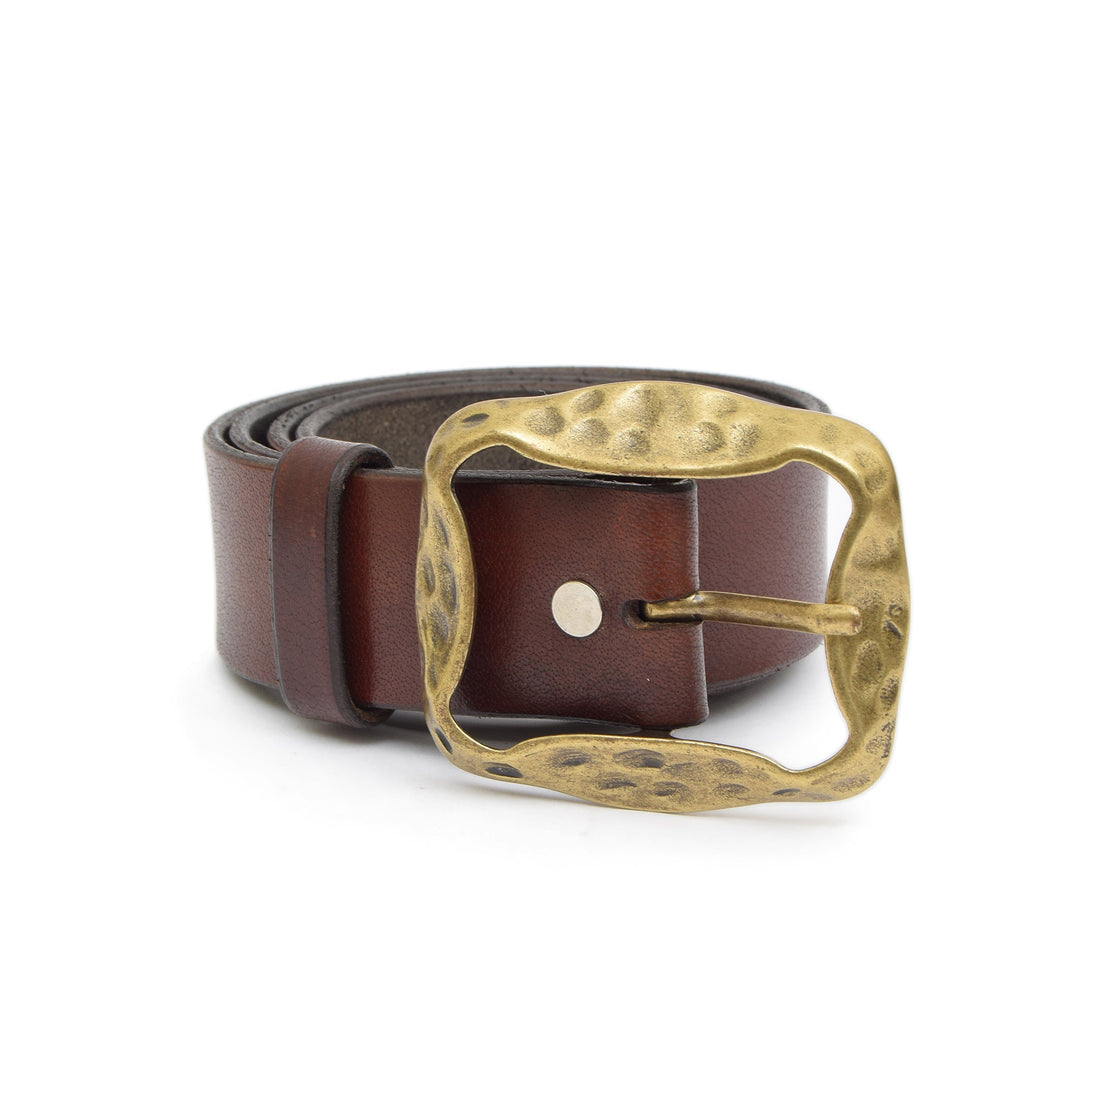 Azazel Vintage Leather Belt Chestnut Brown with Changeable Buckle - Belts Zengoda Shop online from Artisan Brands